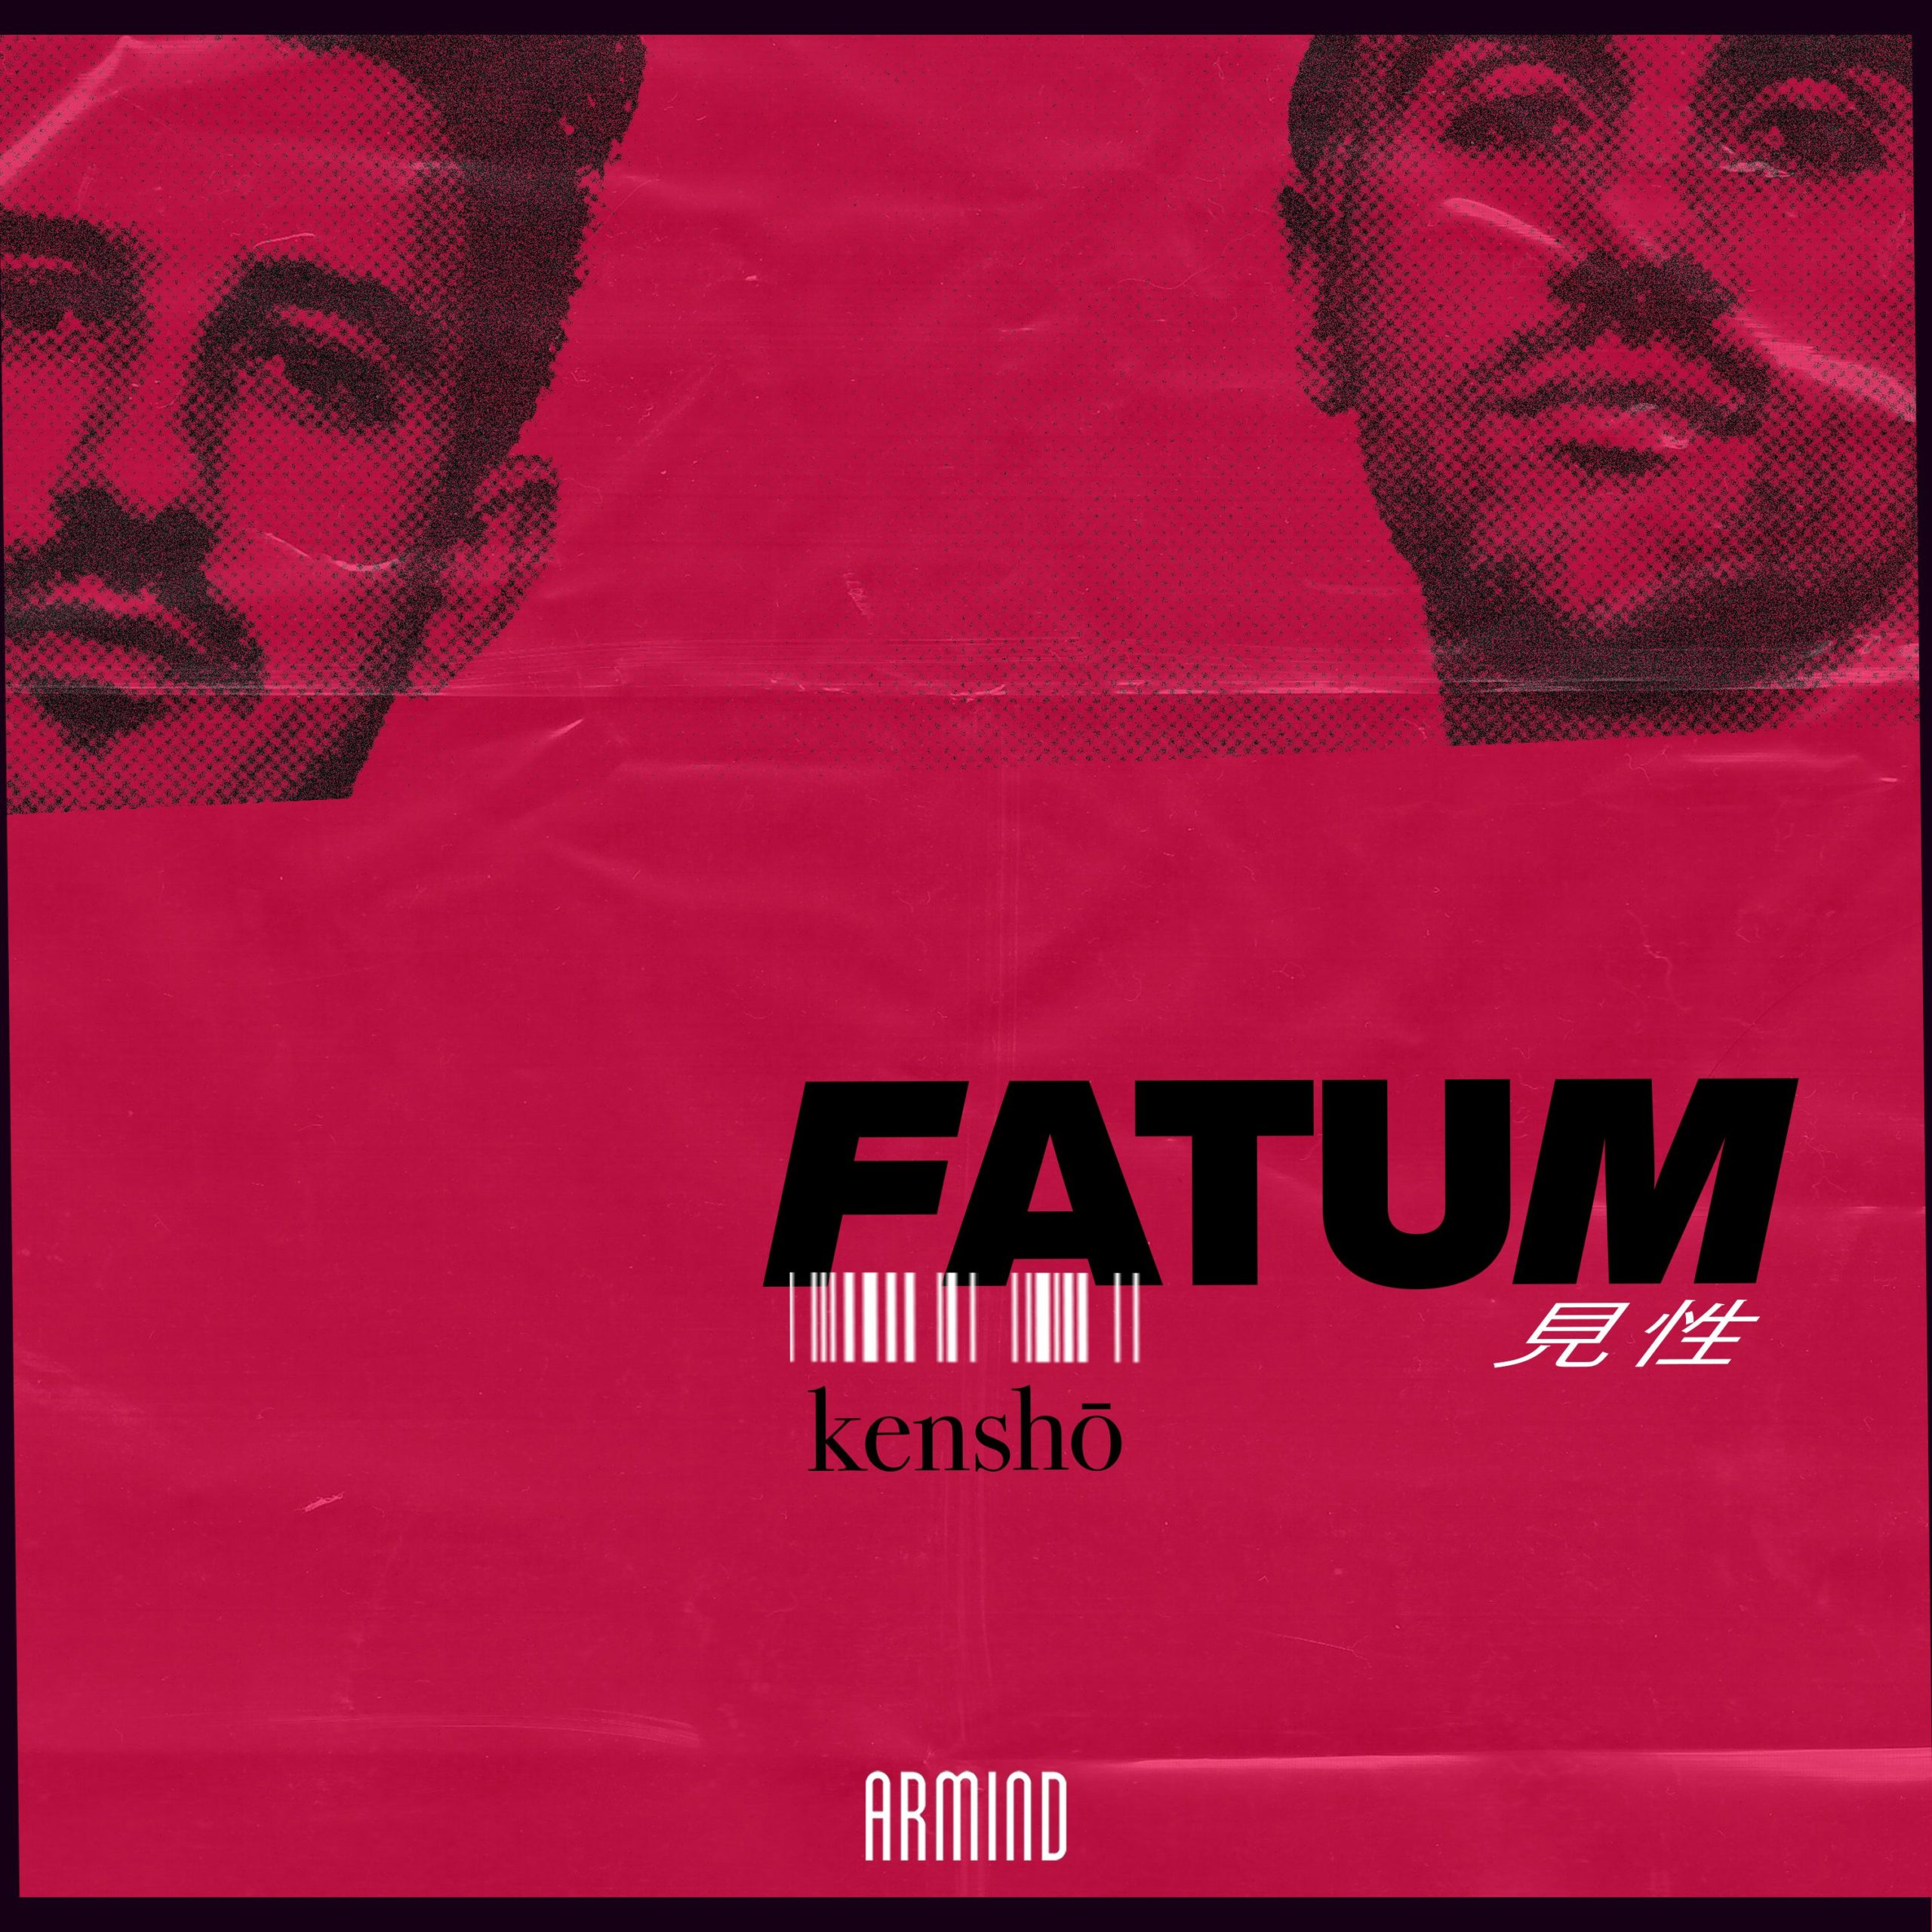 Fatum presents Kensho on Armind